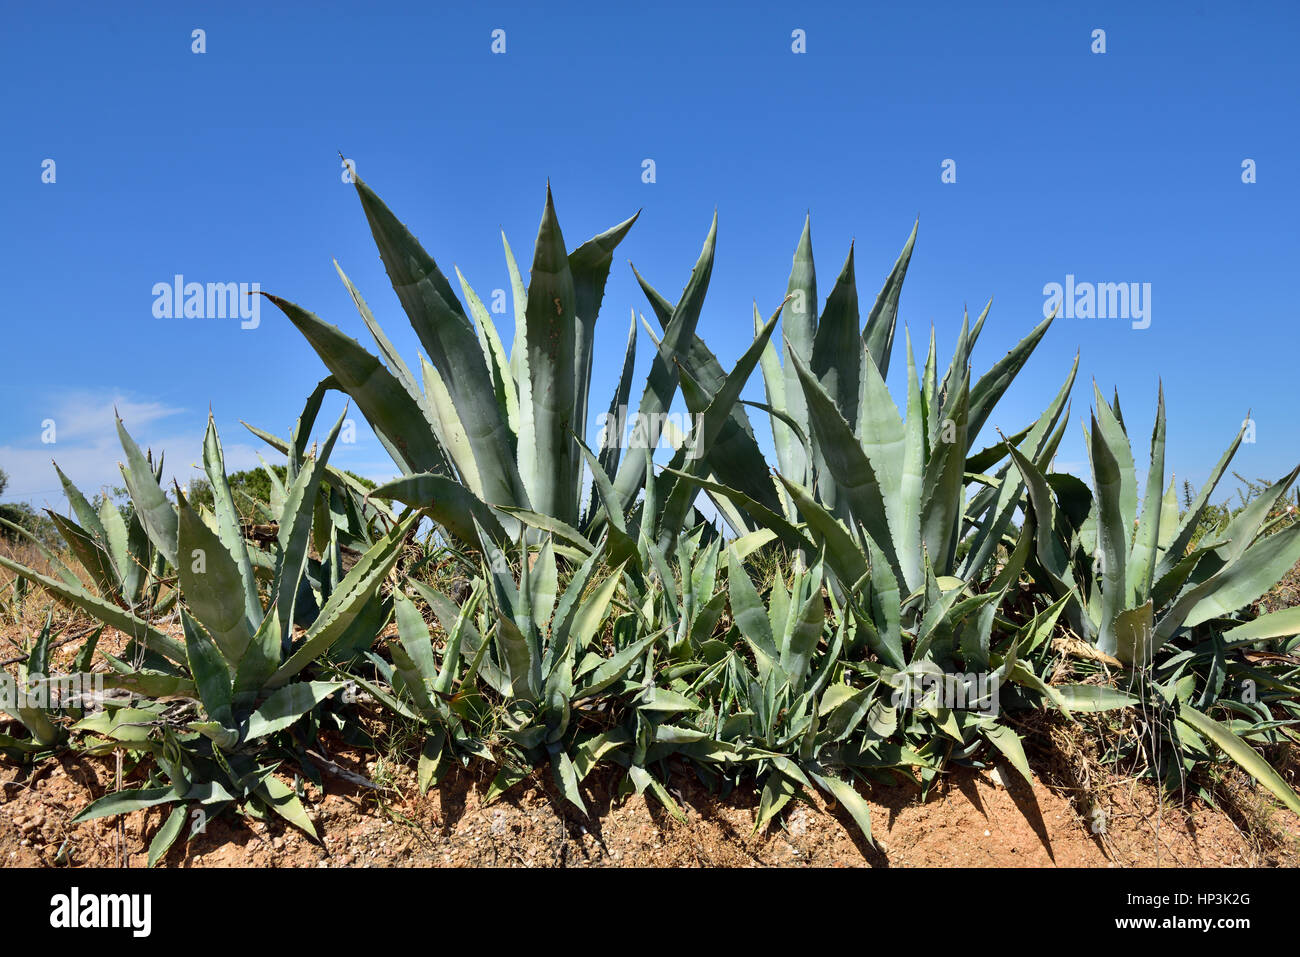 Aloe Vera sukkulente Pflanzen wächst Algarve, Portugal Stockfotografie -  Alamy